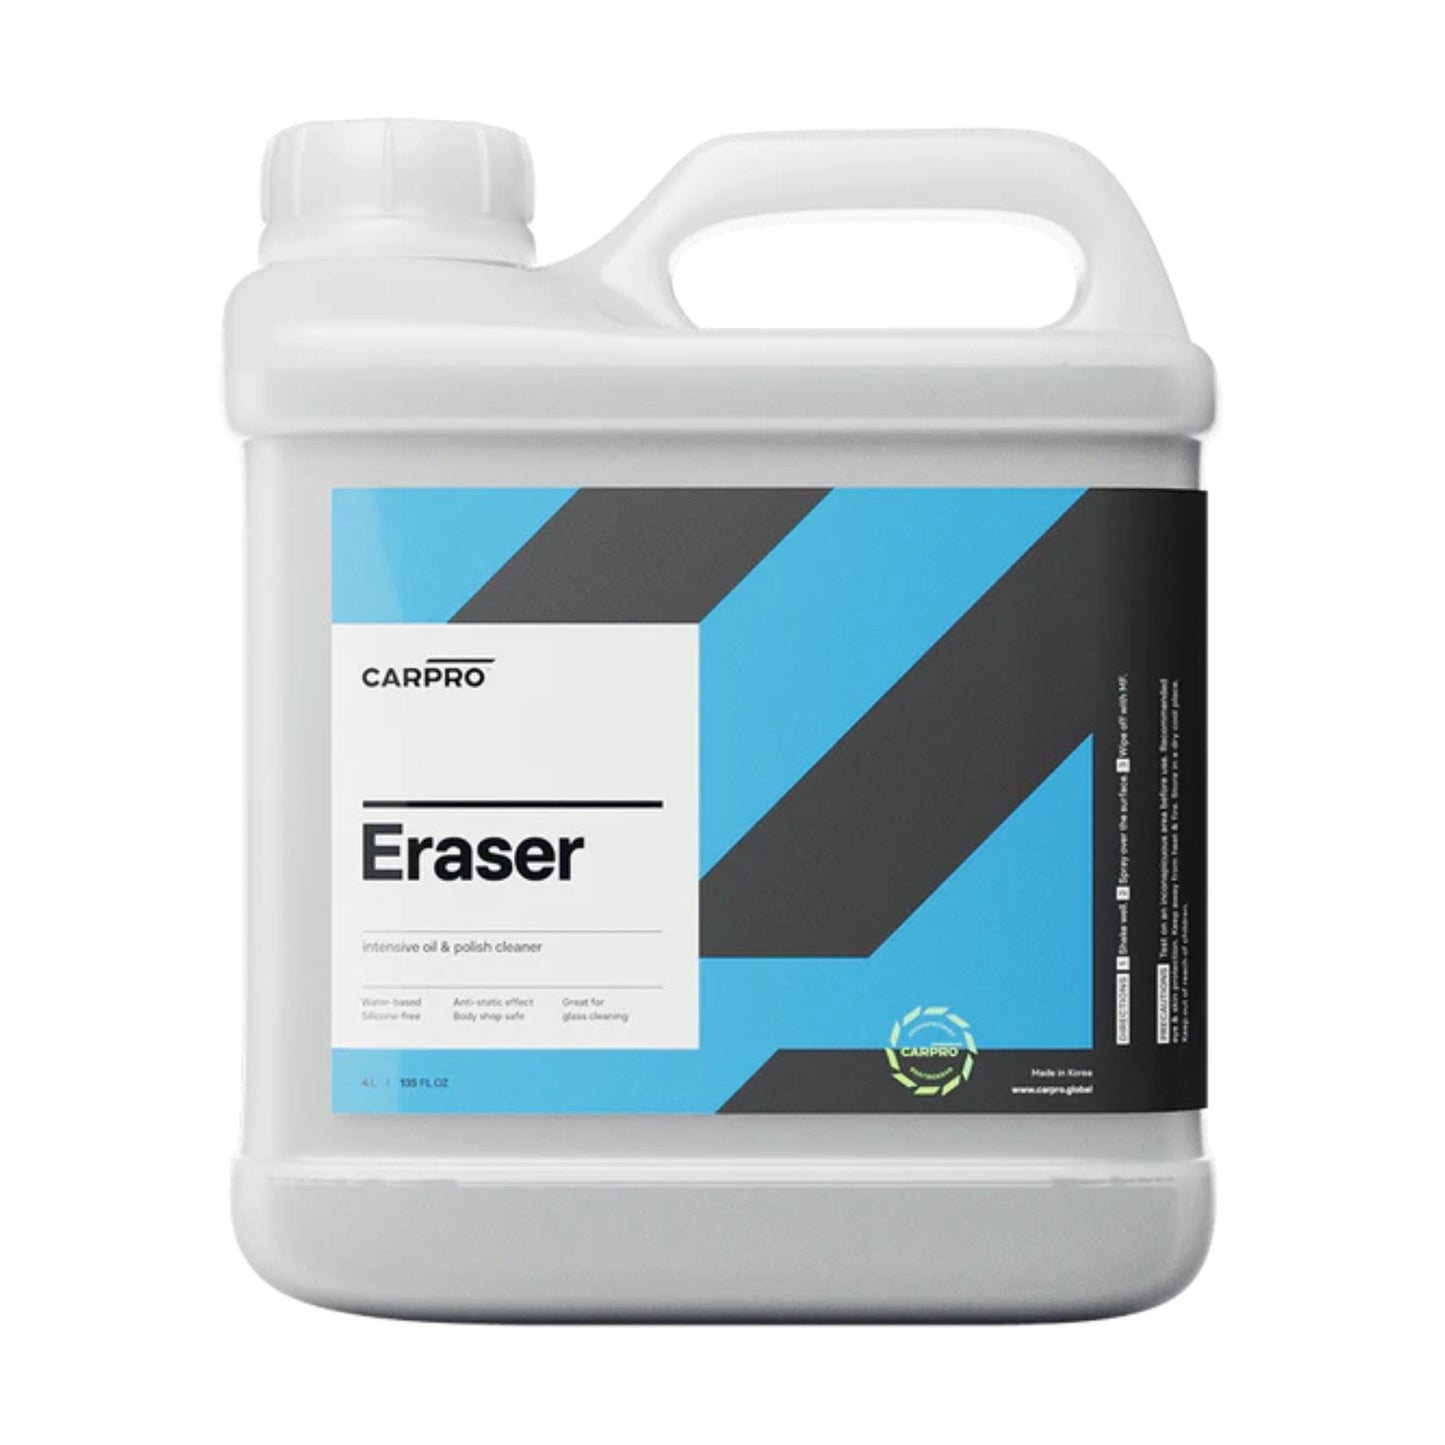 CarPro Eraser Intensive Oil & Polish Remover - Bocar Depot Mississauga - Carpro -- Bocar Depot Mississauga